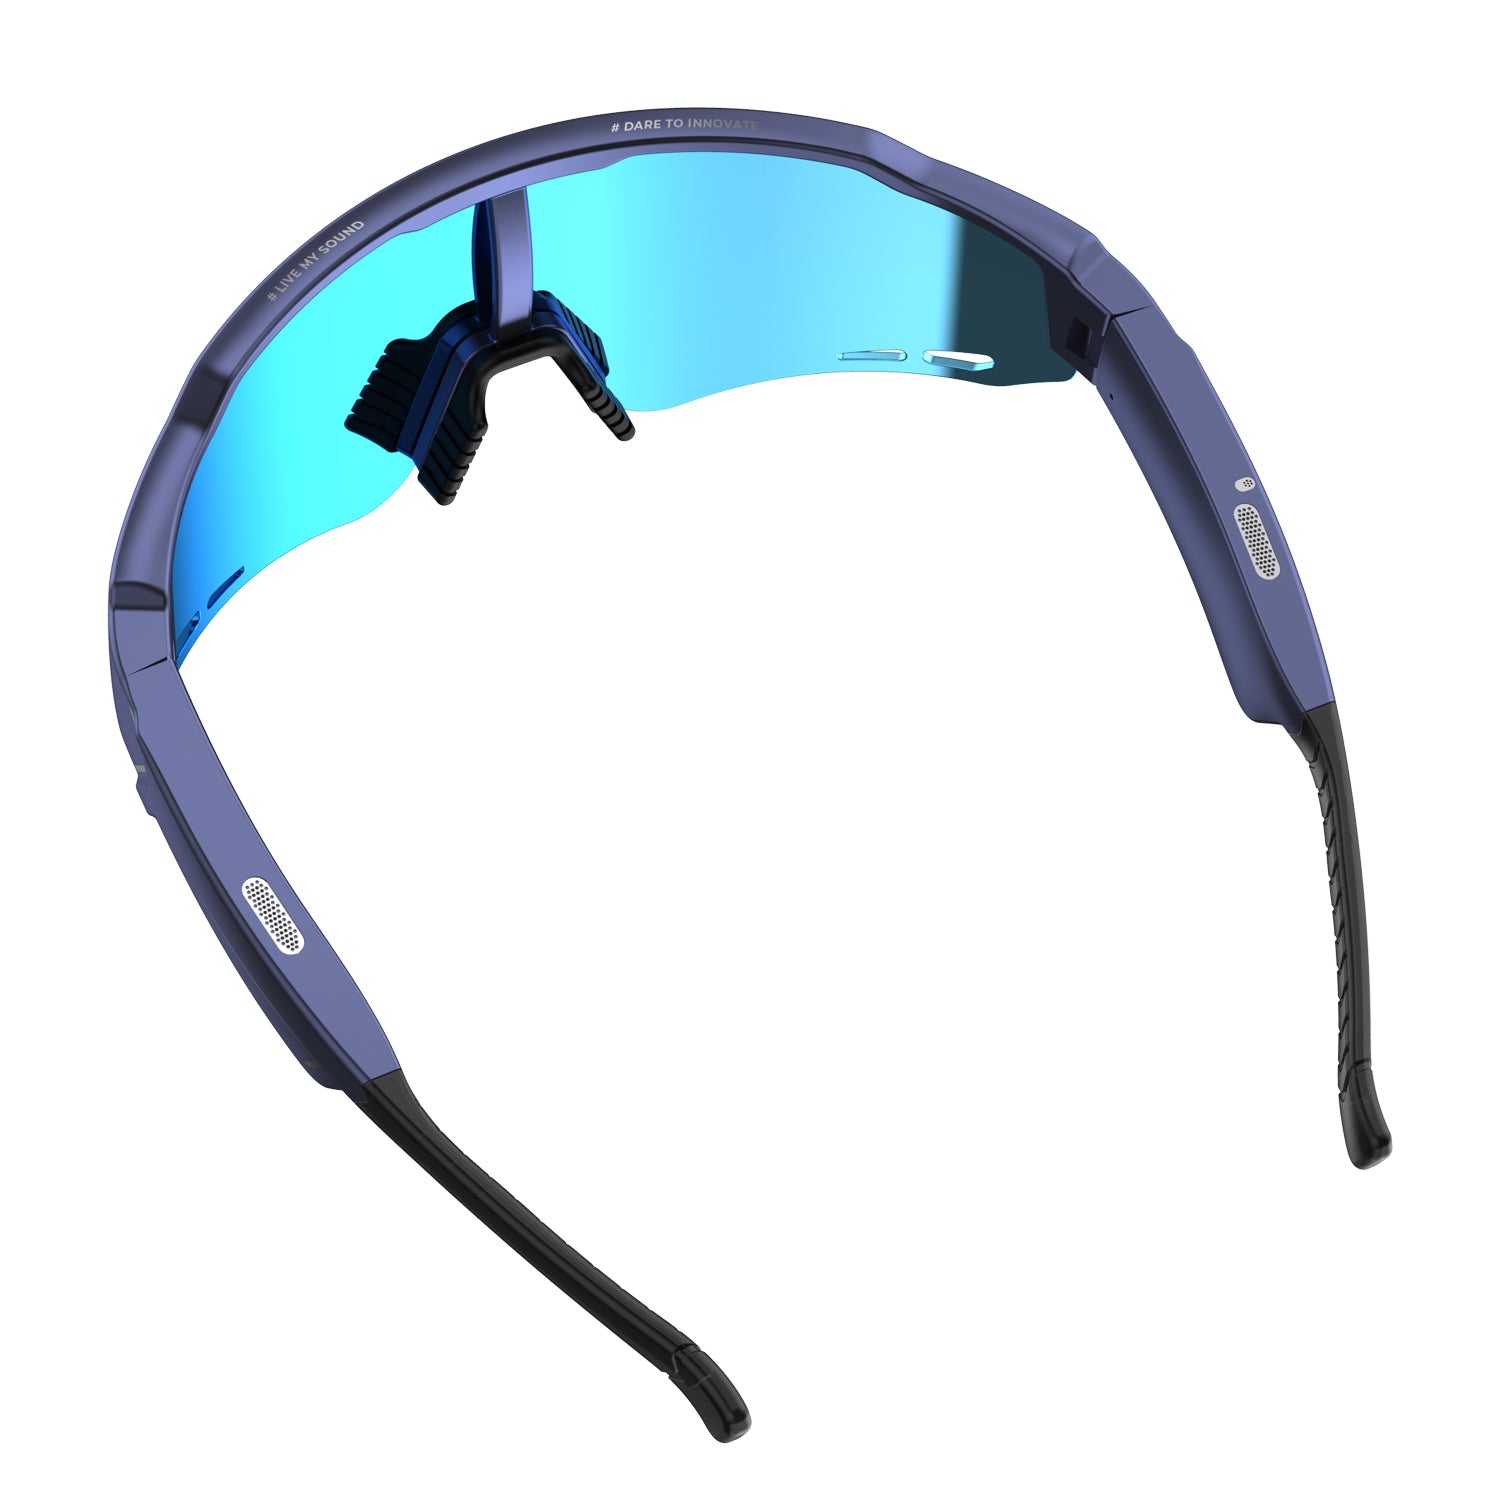  HPLRZXI 2 pairs sports sunglasses Cycling sunglasses